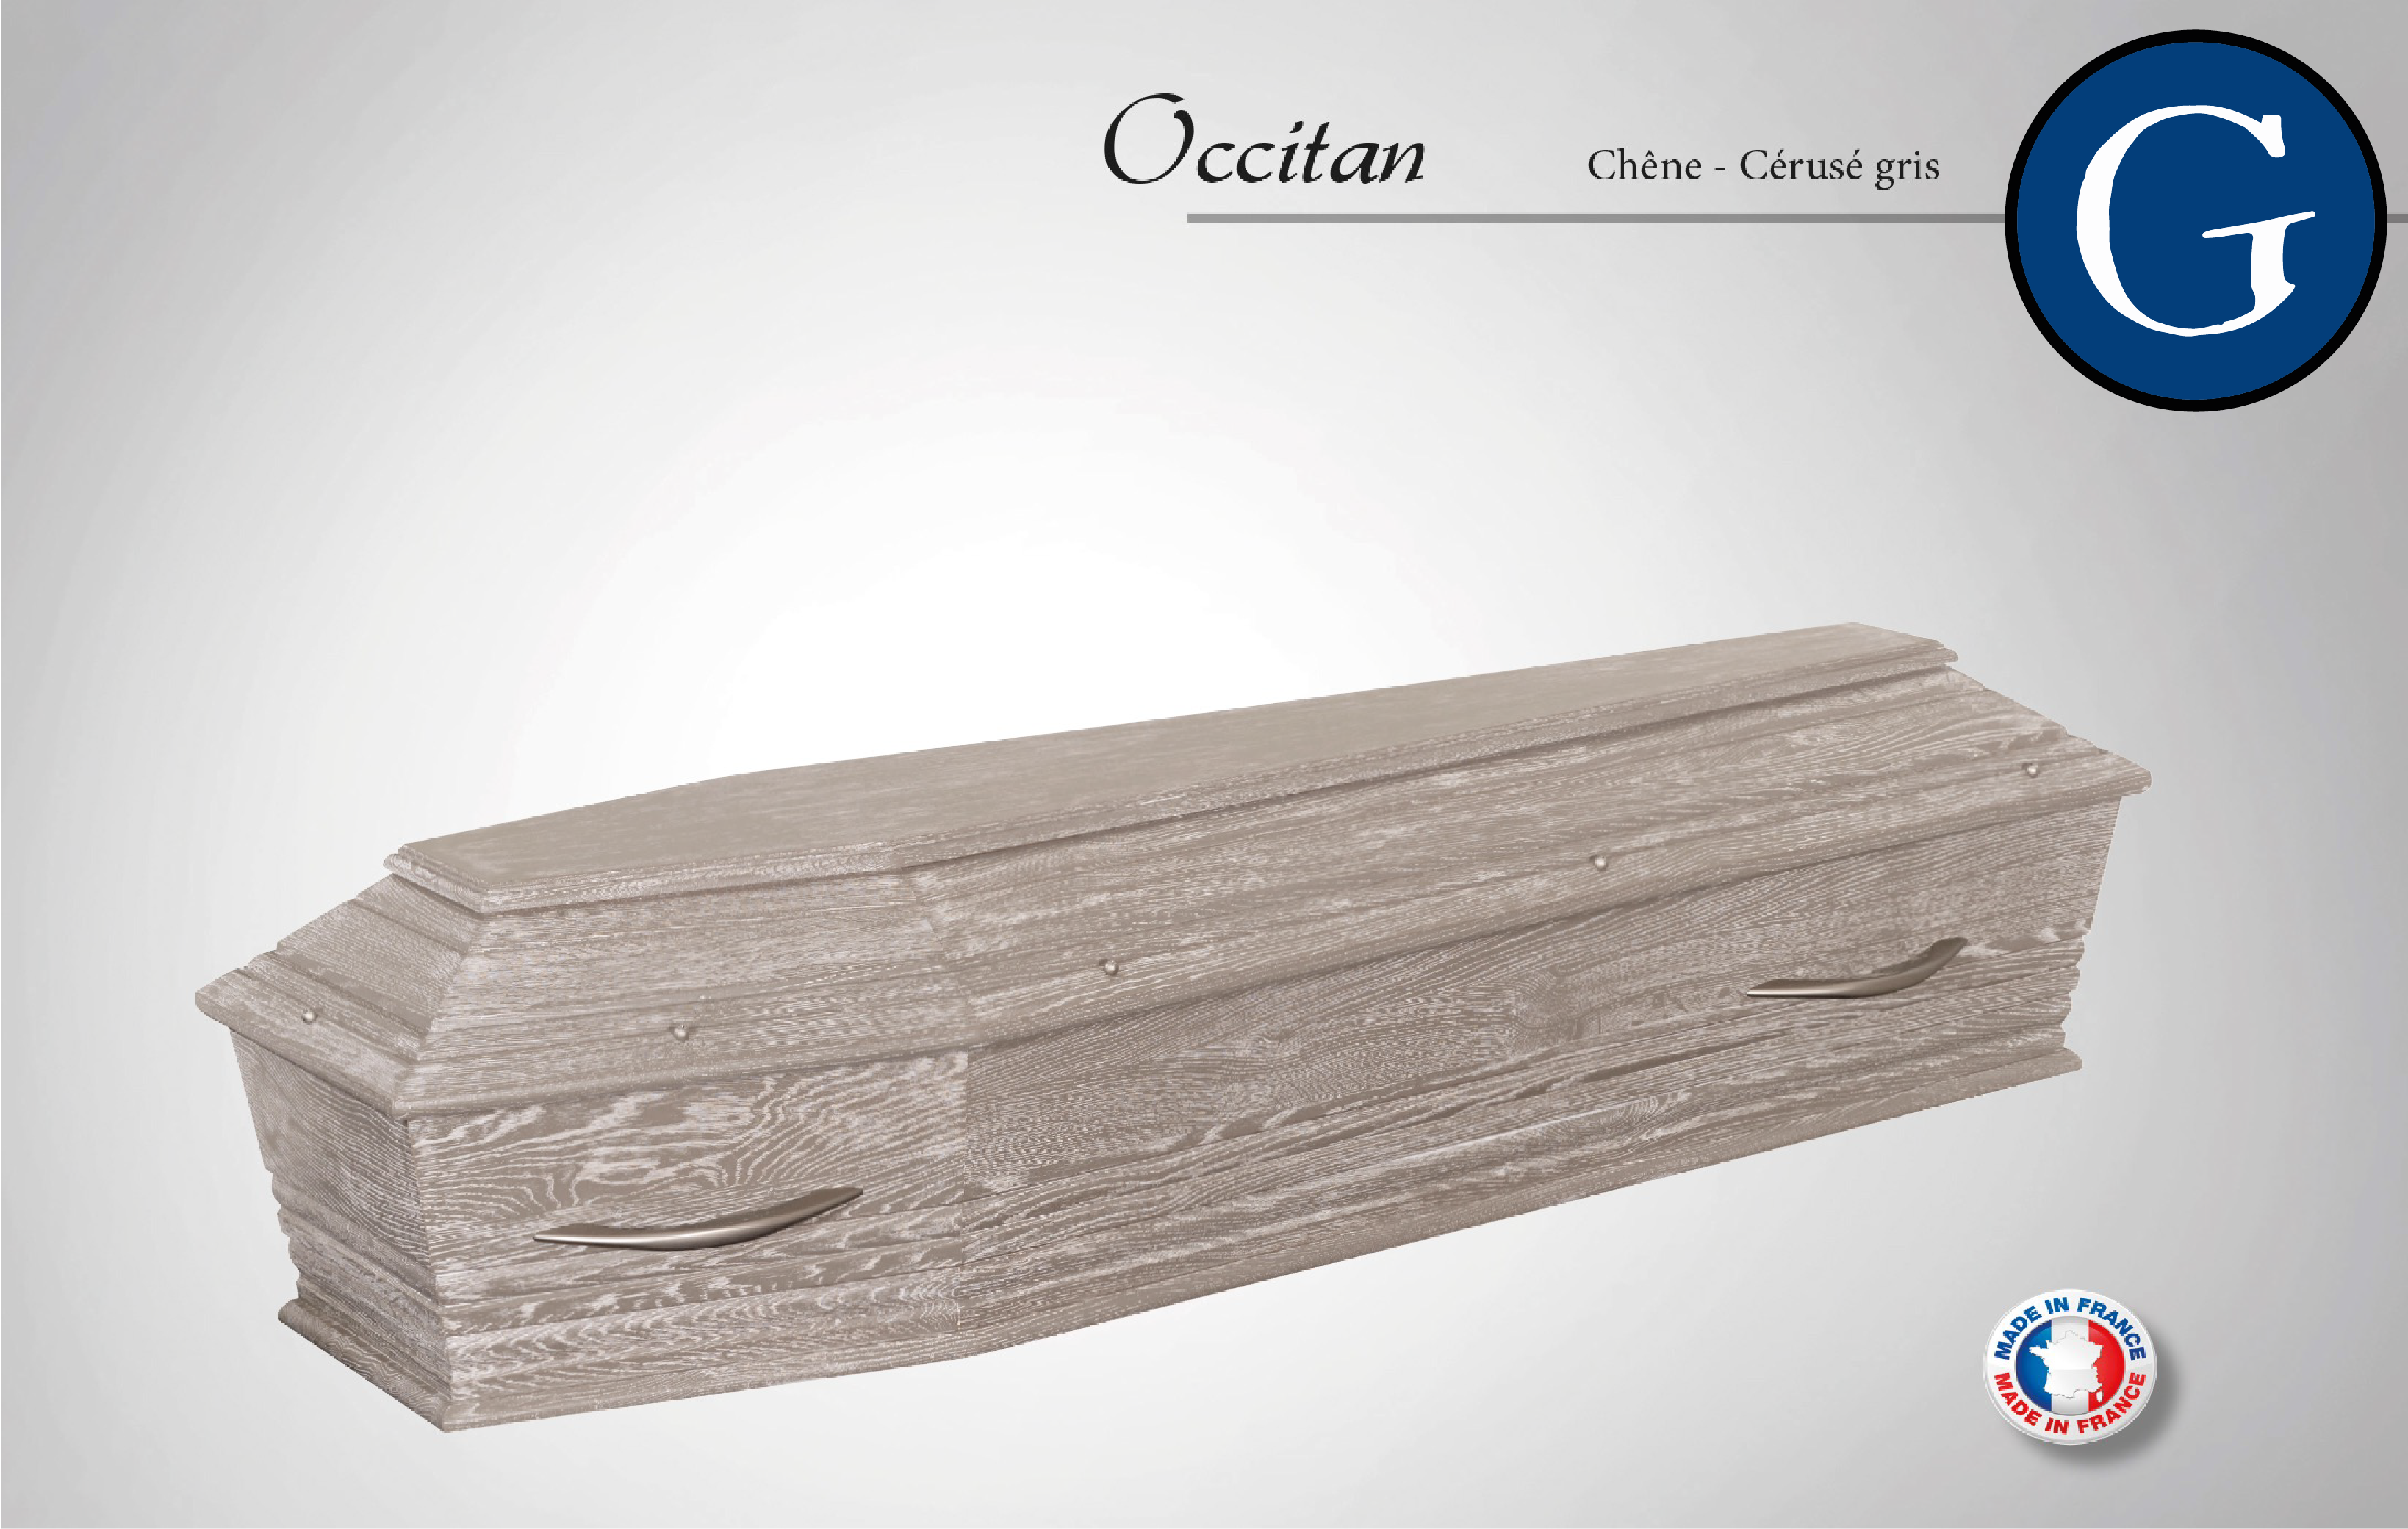 Cercueil Occitan - Chêne cerusé gris